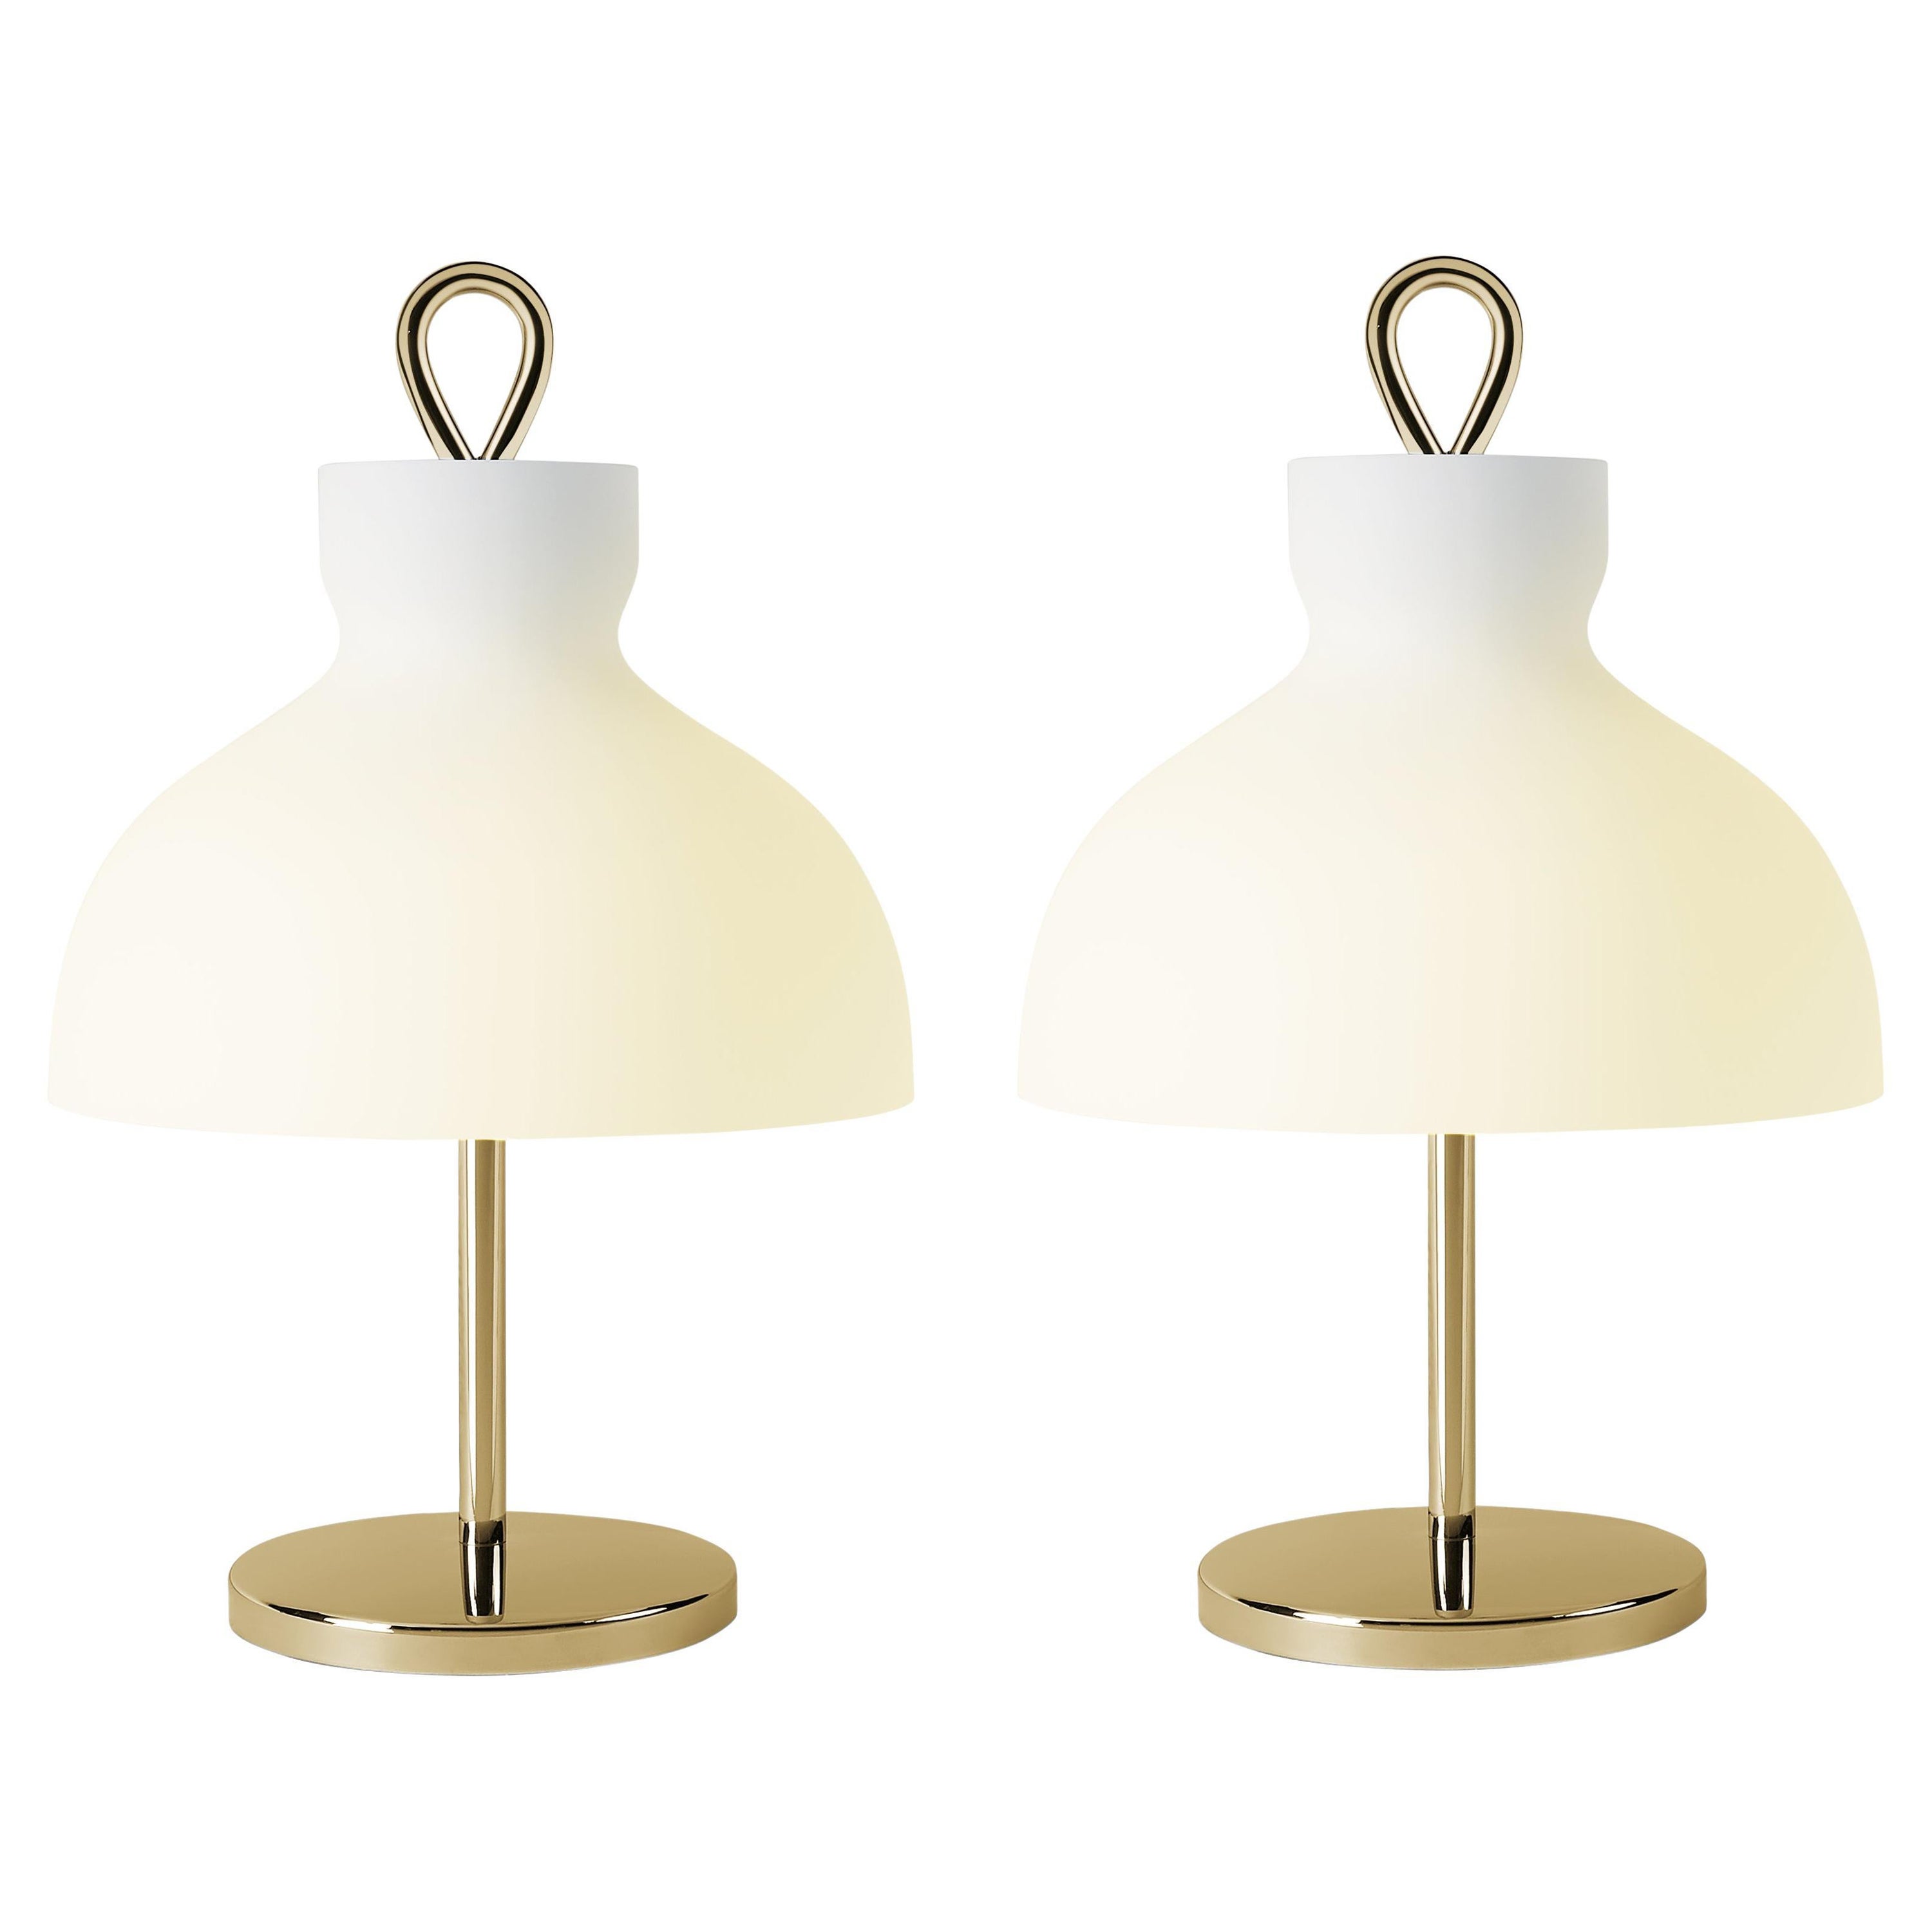 Pair of Ignazio Gardella 'Arenzano Bassa' Table Lamps in Brass and Glass For Sale